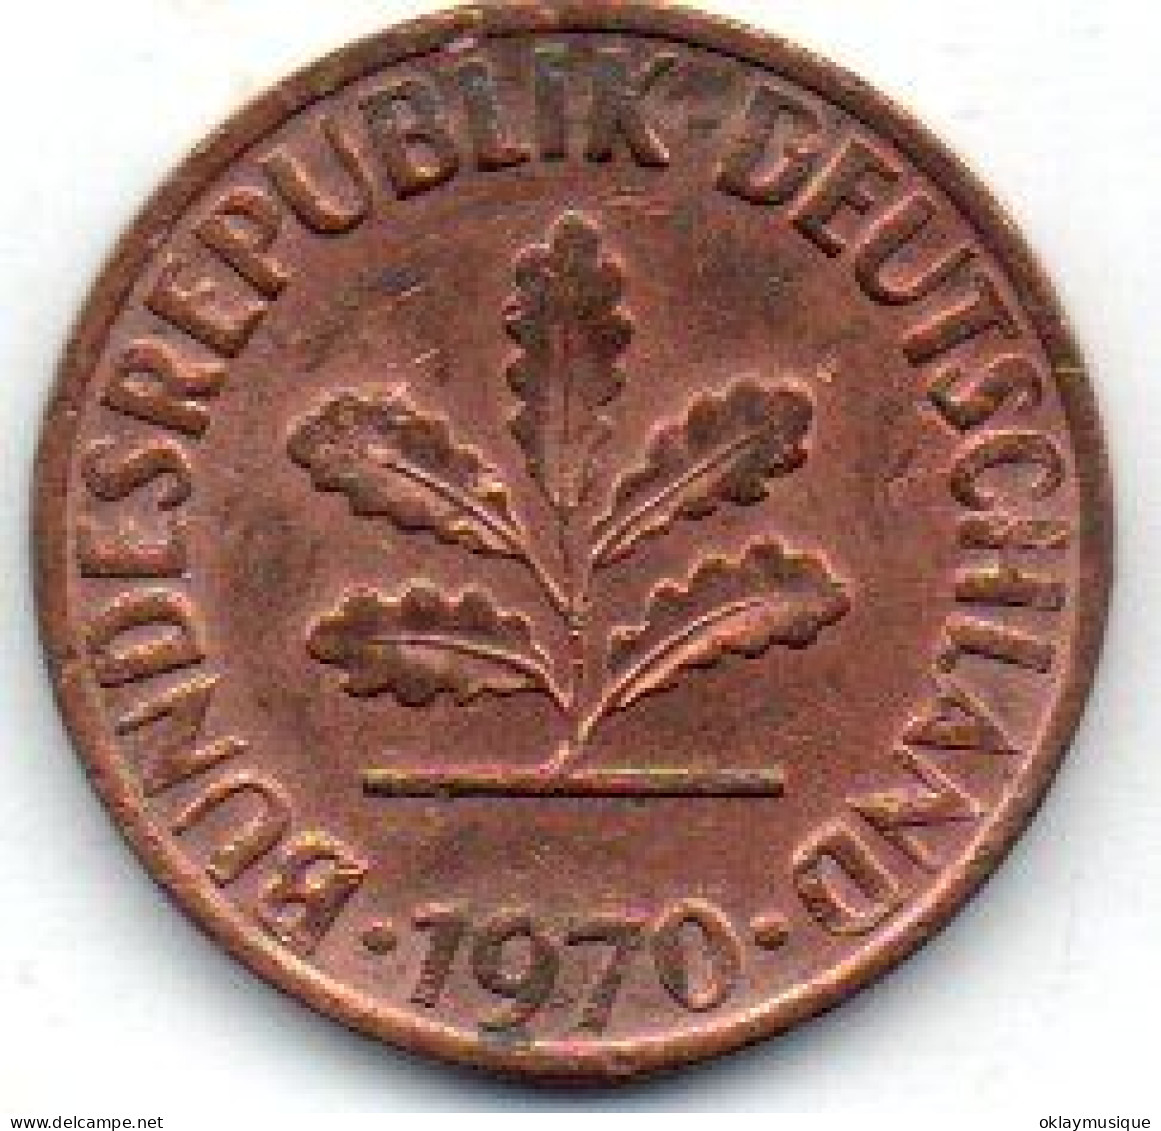 2 Pfennig 1970D - 2 Pfennig